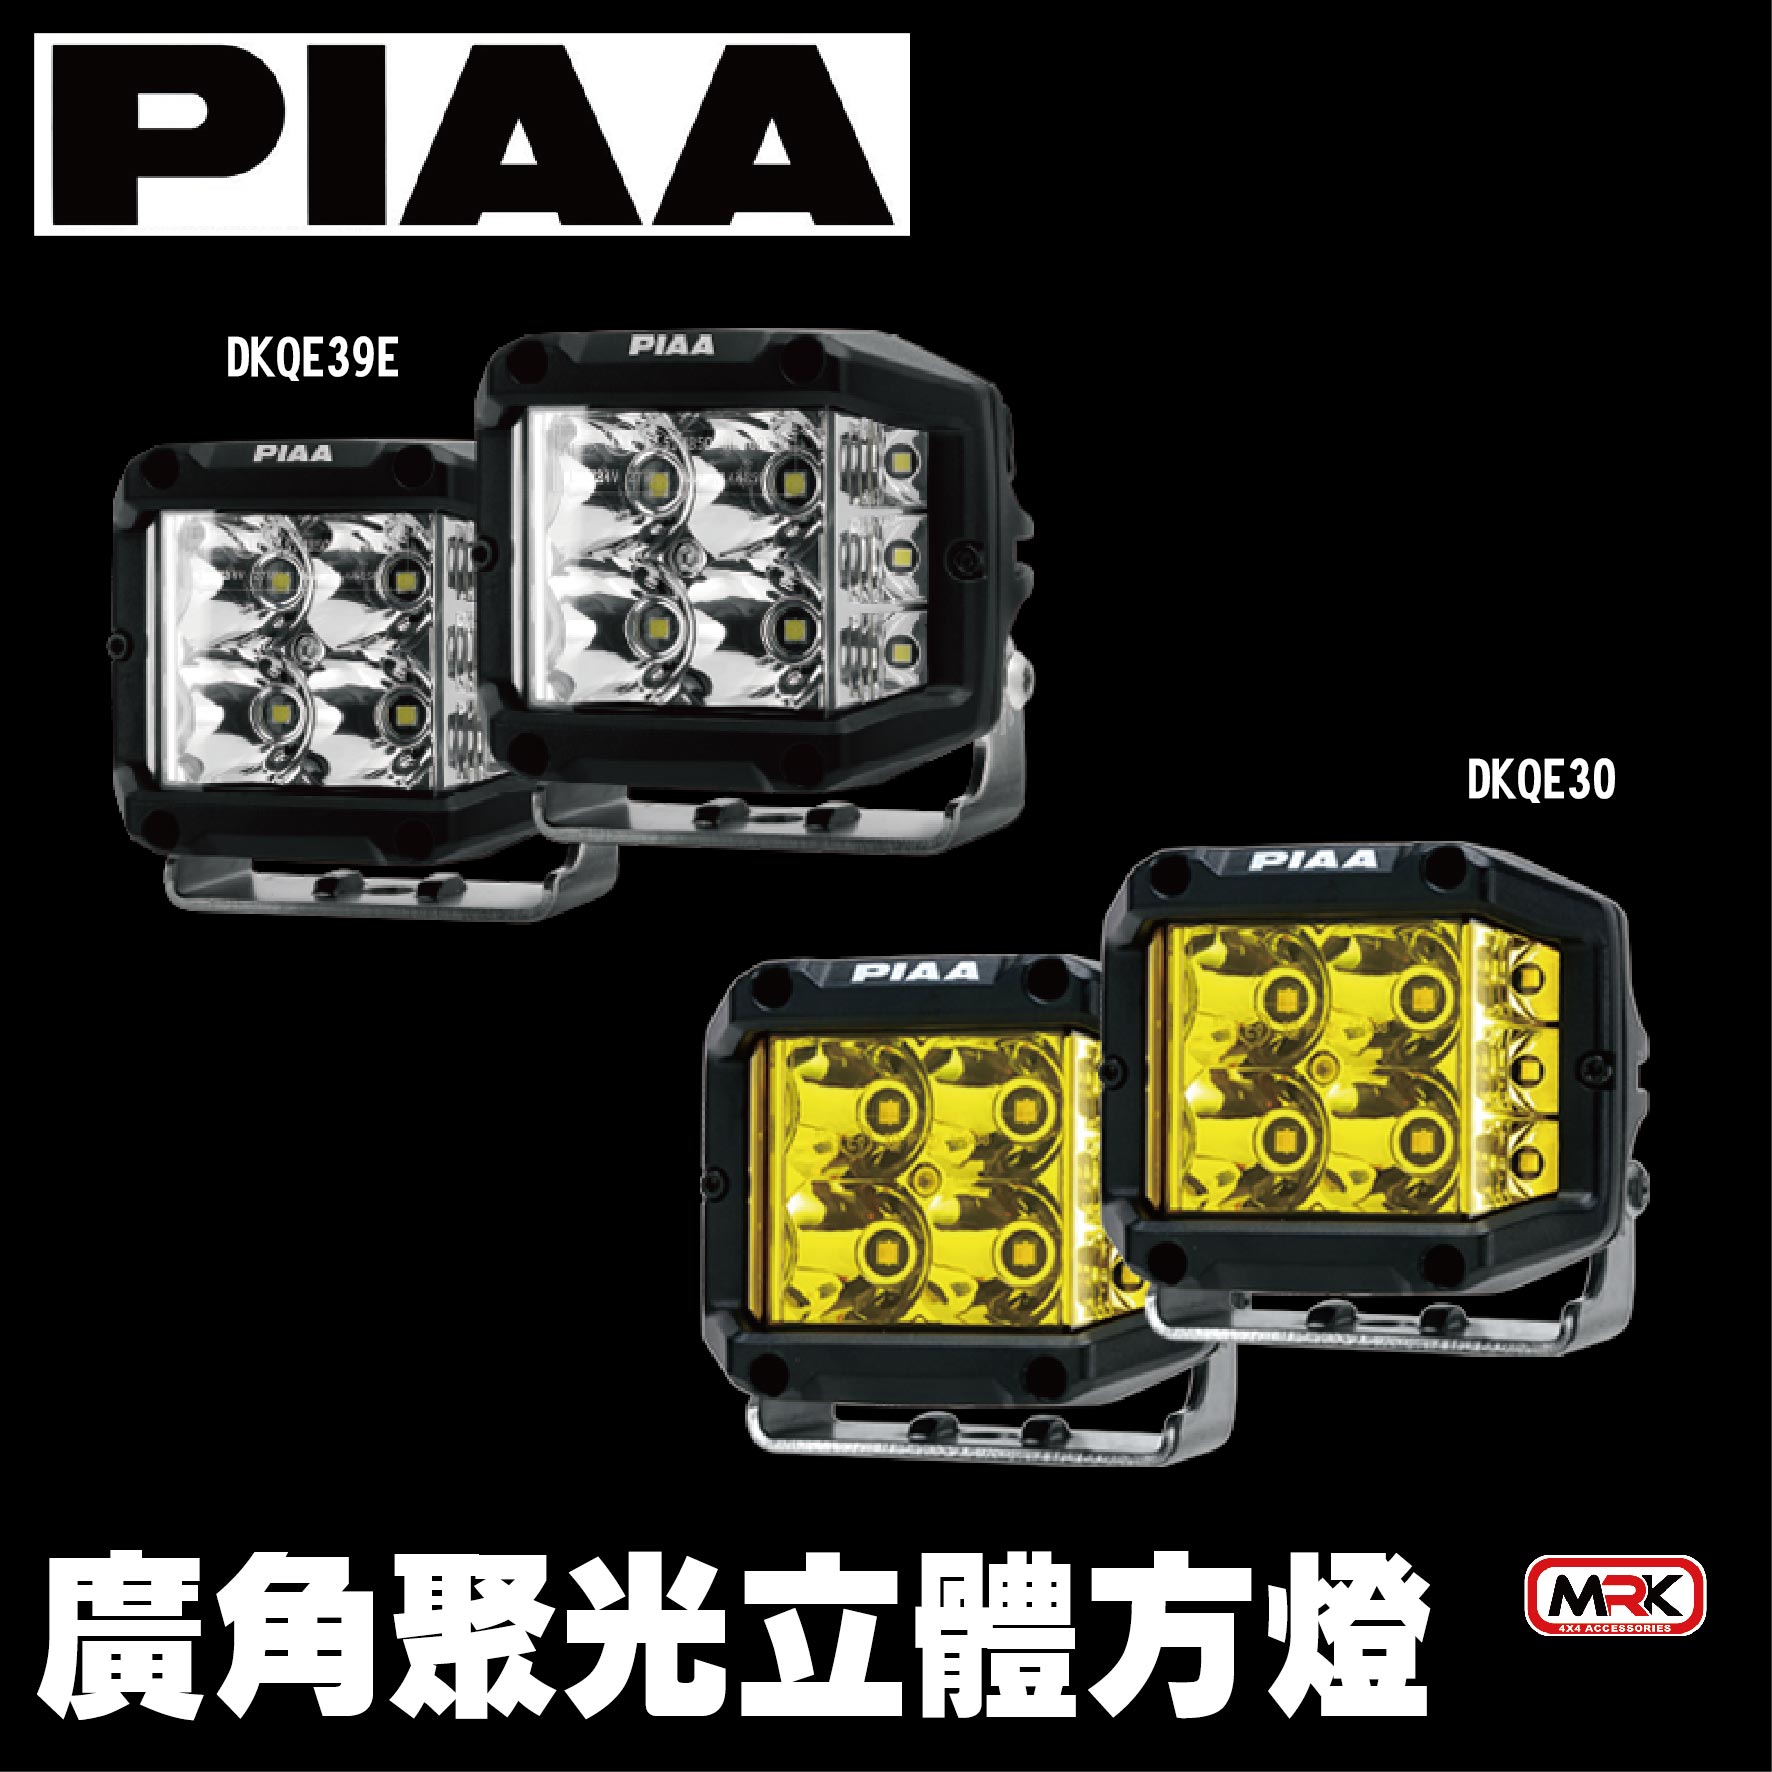 【MRK】日本 PIAA QUAD EDGE 黃色 白色 廣角聚光立體方燈 汽車 重機 越野輔助燈 方燈